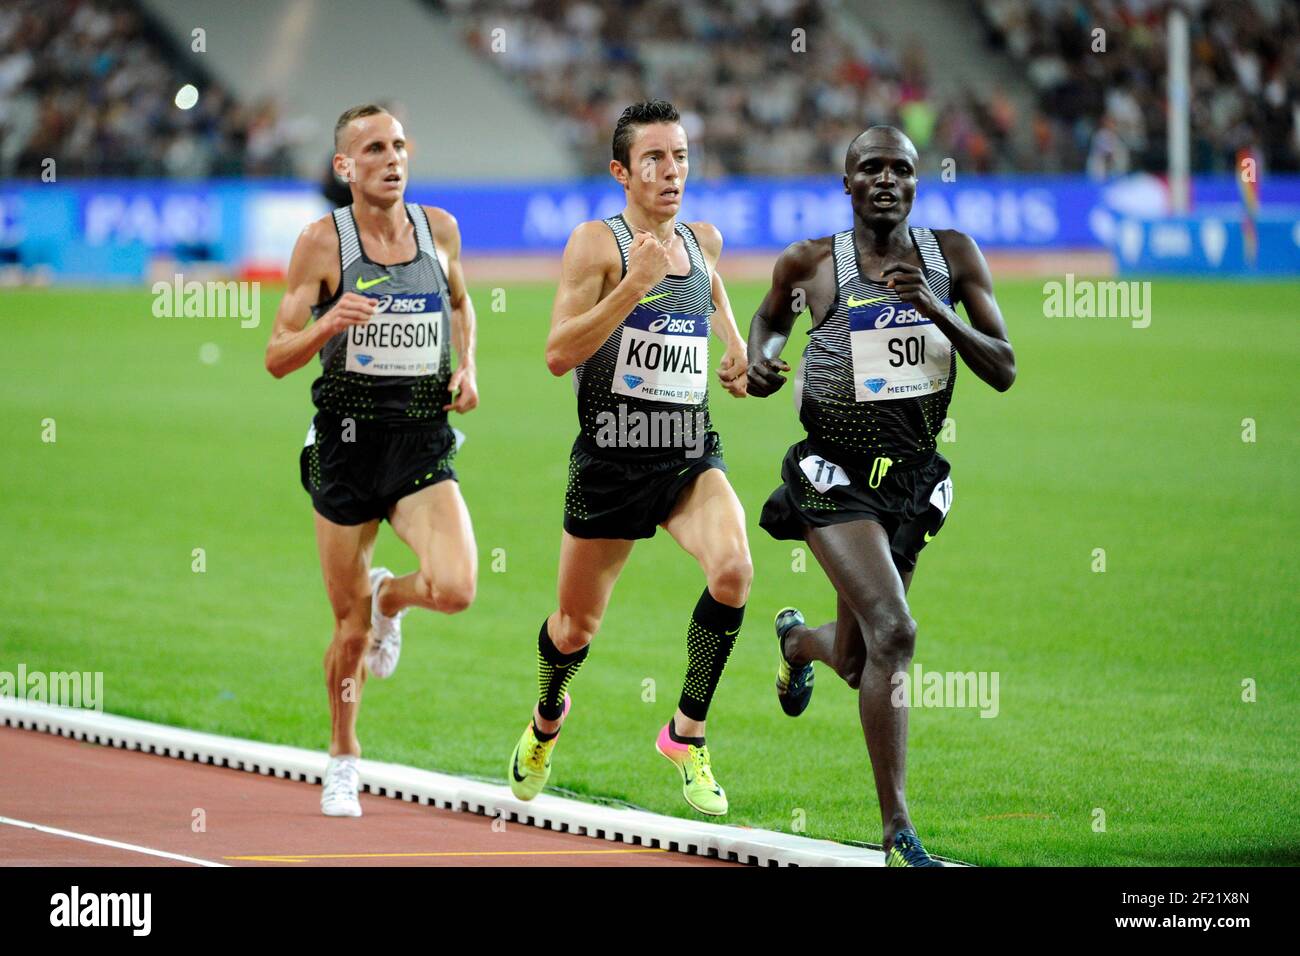 France's Yoann Kowal competes in Men's 3000m during the Meeting de Paris  2016, at Stade de France, Saint Denis, France, on August 27, 2016 - Photo  Jean-Marie Hervio / KMSP / DPPI Stock Photo - Alamy